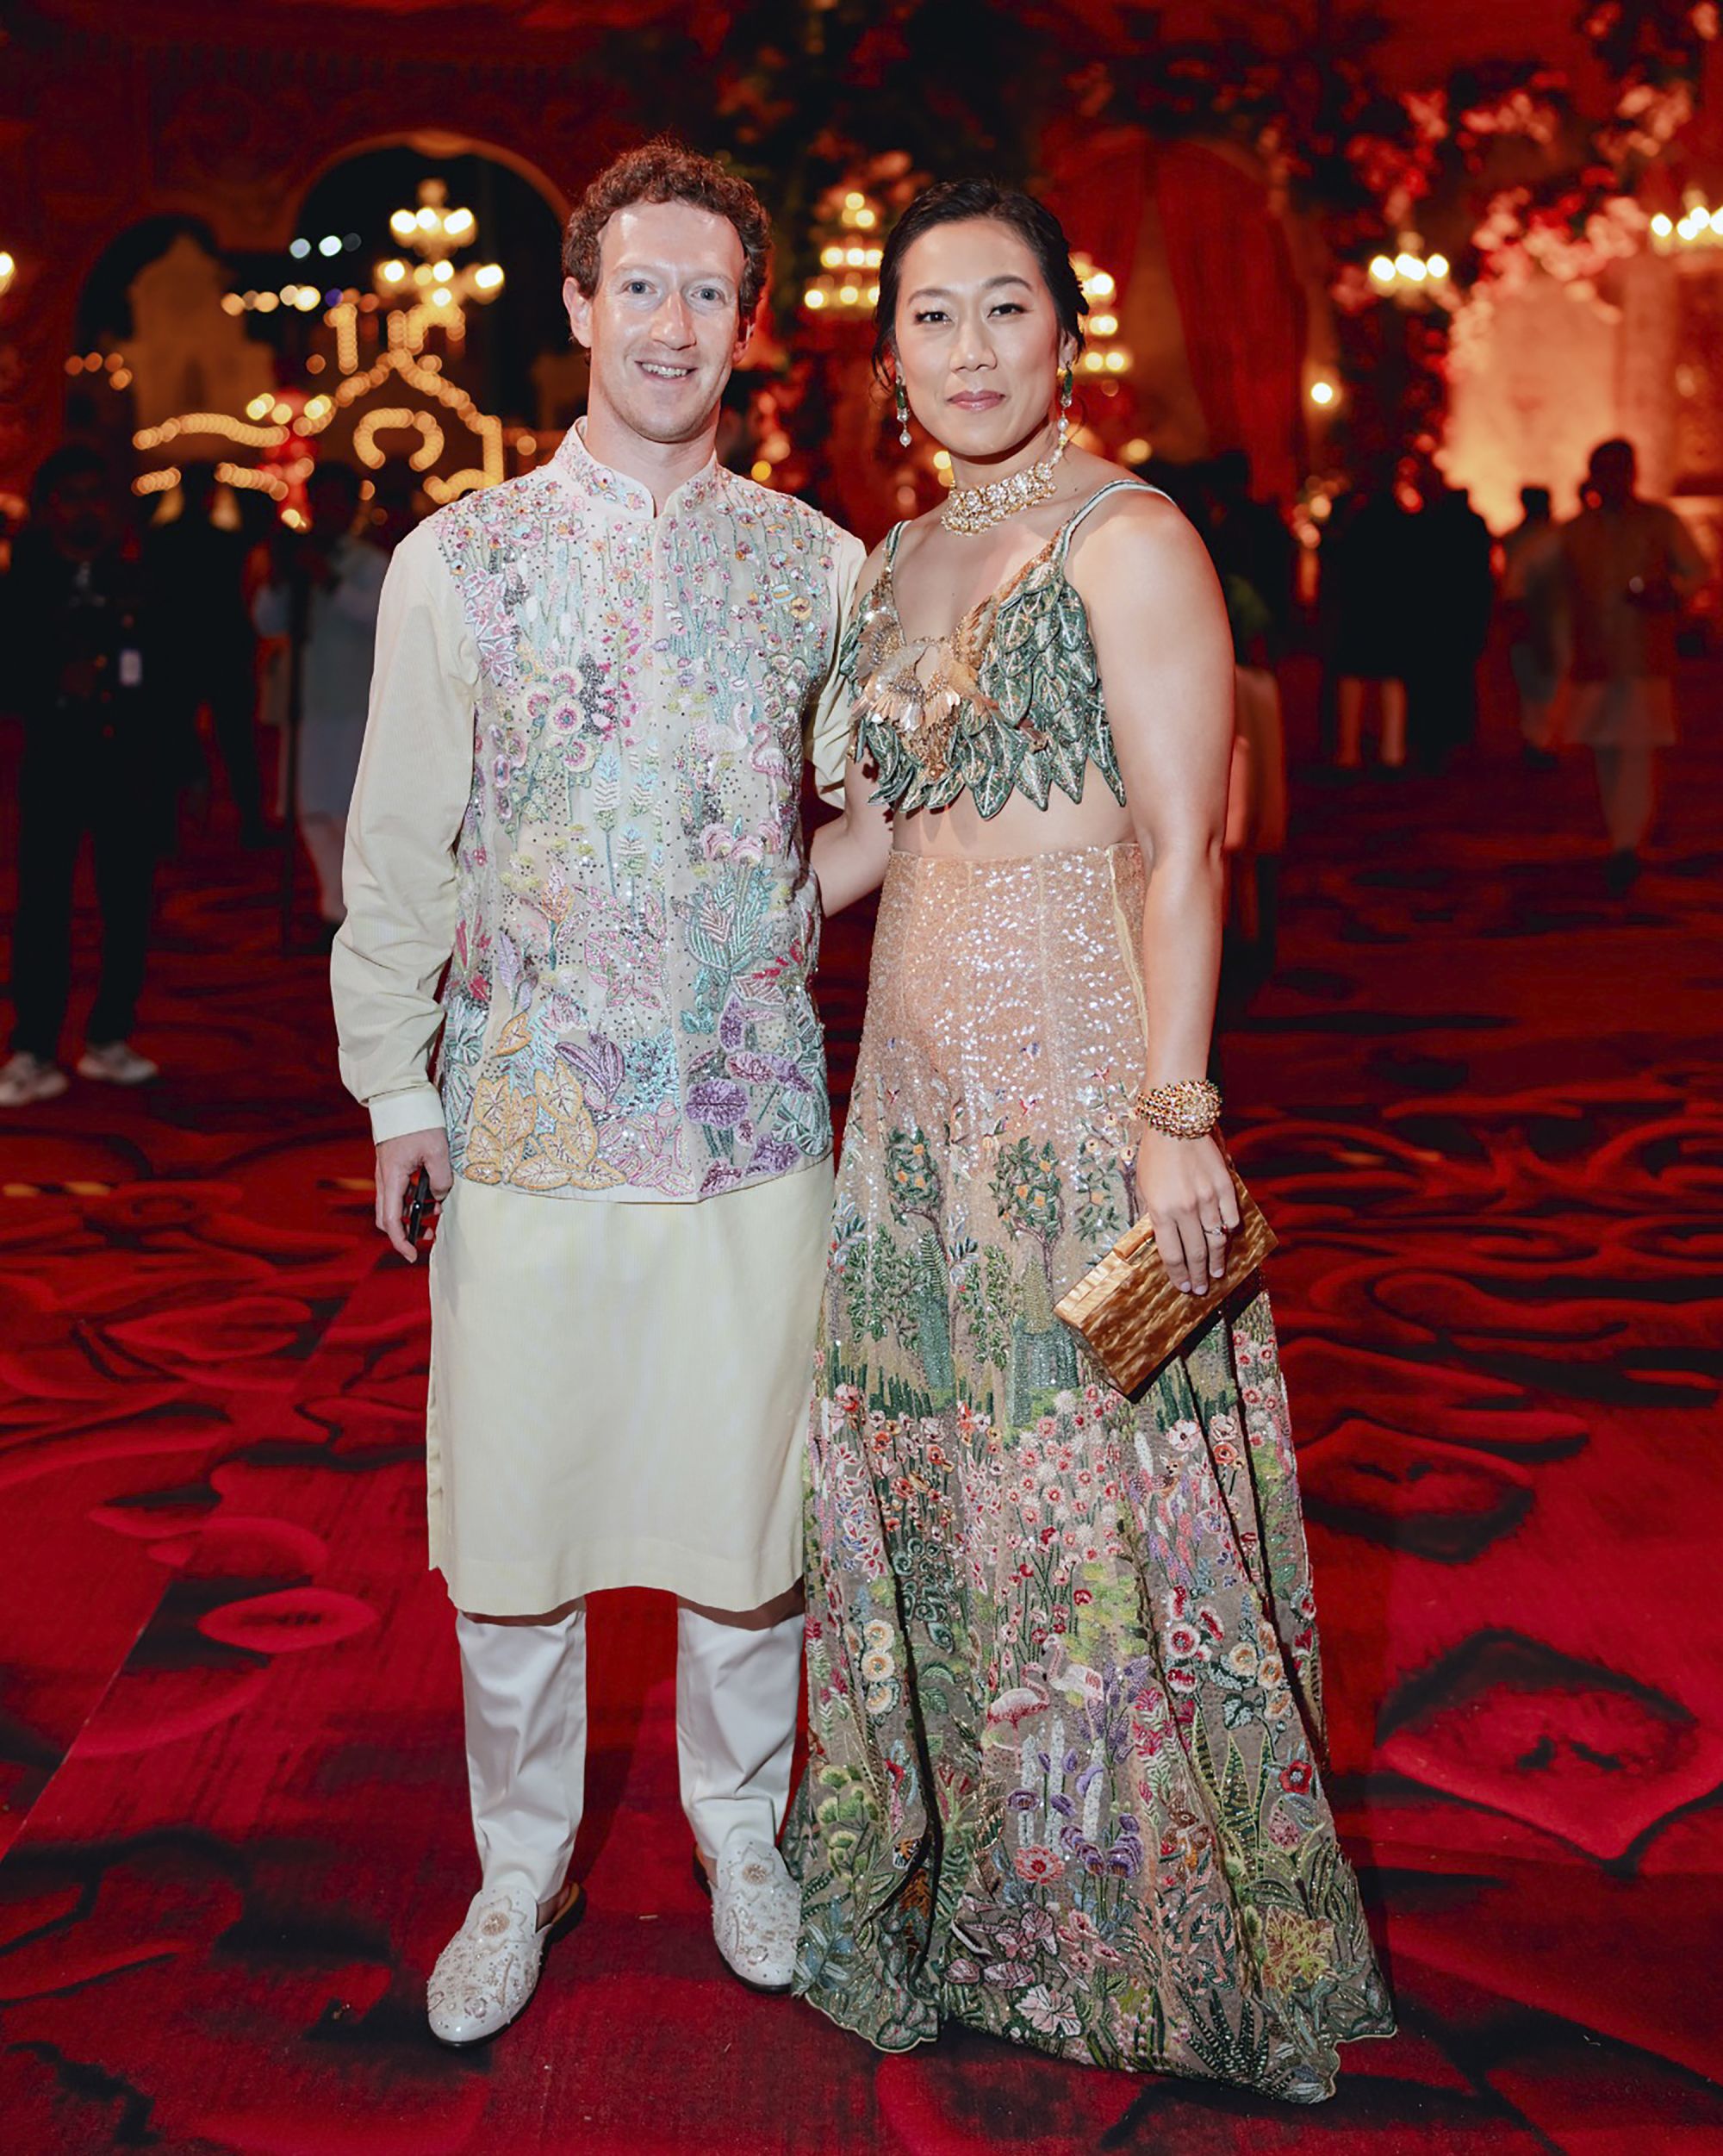 Mark Zuckerberg and his wife Priscilla Chan pose at a pre-wedding bash held for Mukesh Ambani's son Anant Ambani.